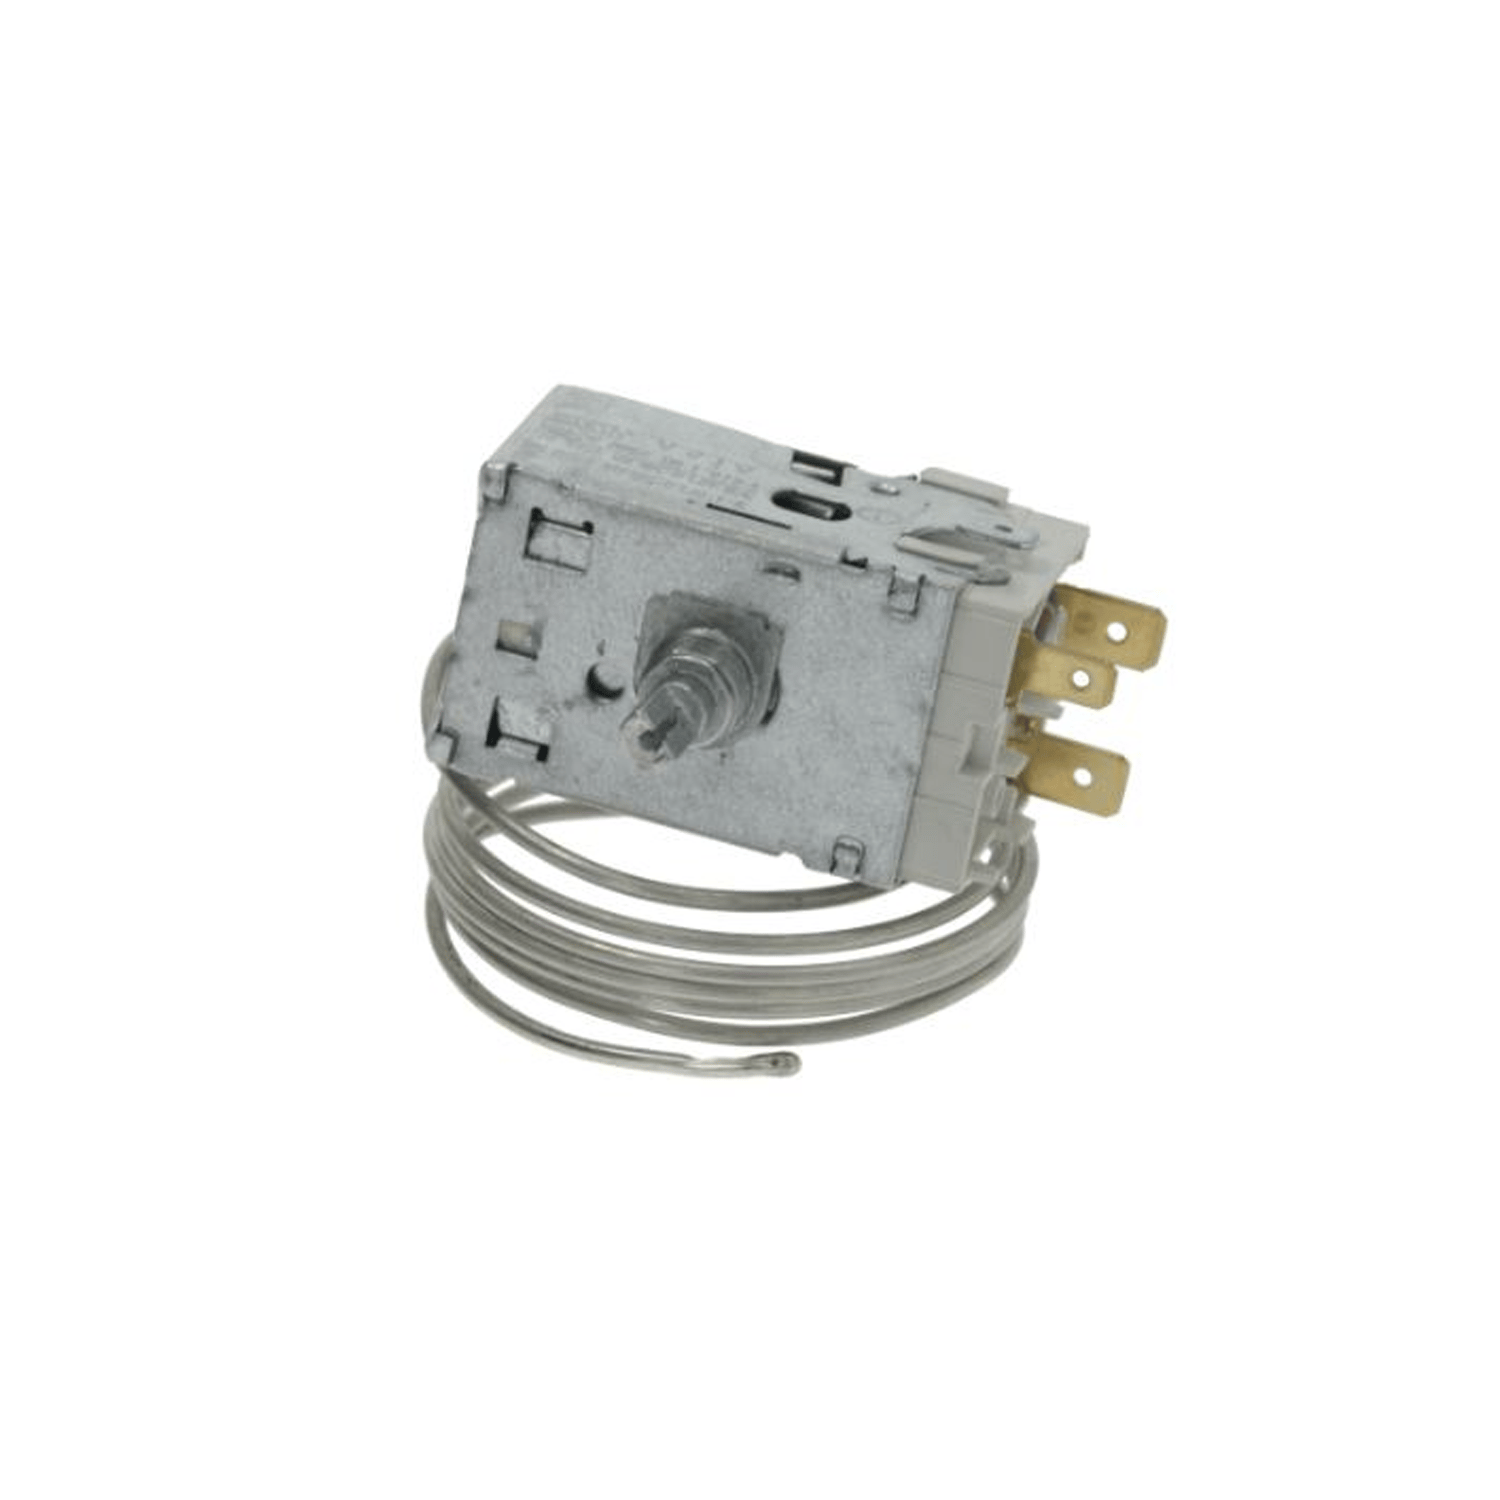 Thermostat Atea A13-0063 für Kühlschrank, min. 4,5 °C, max. 30 °C